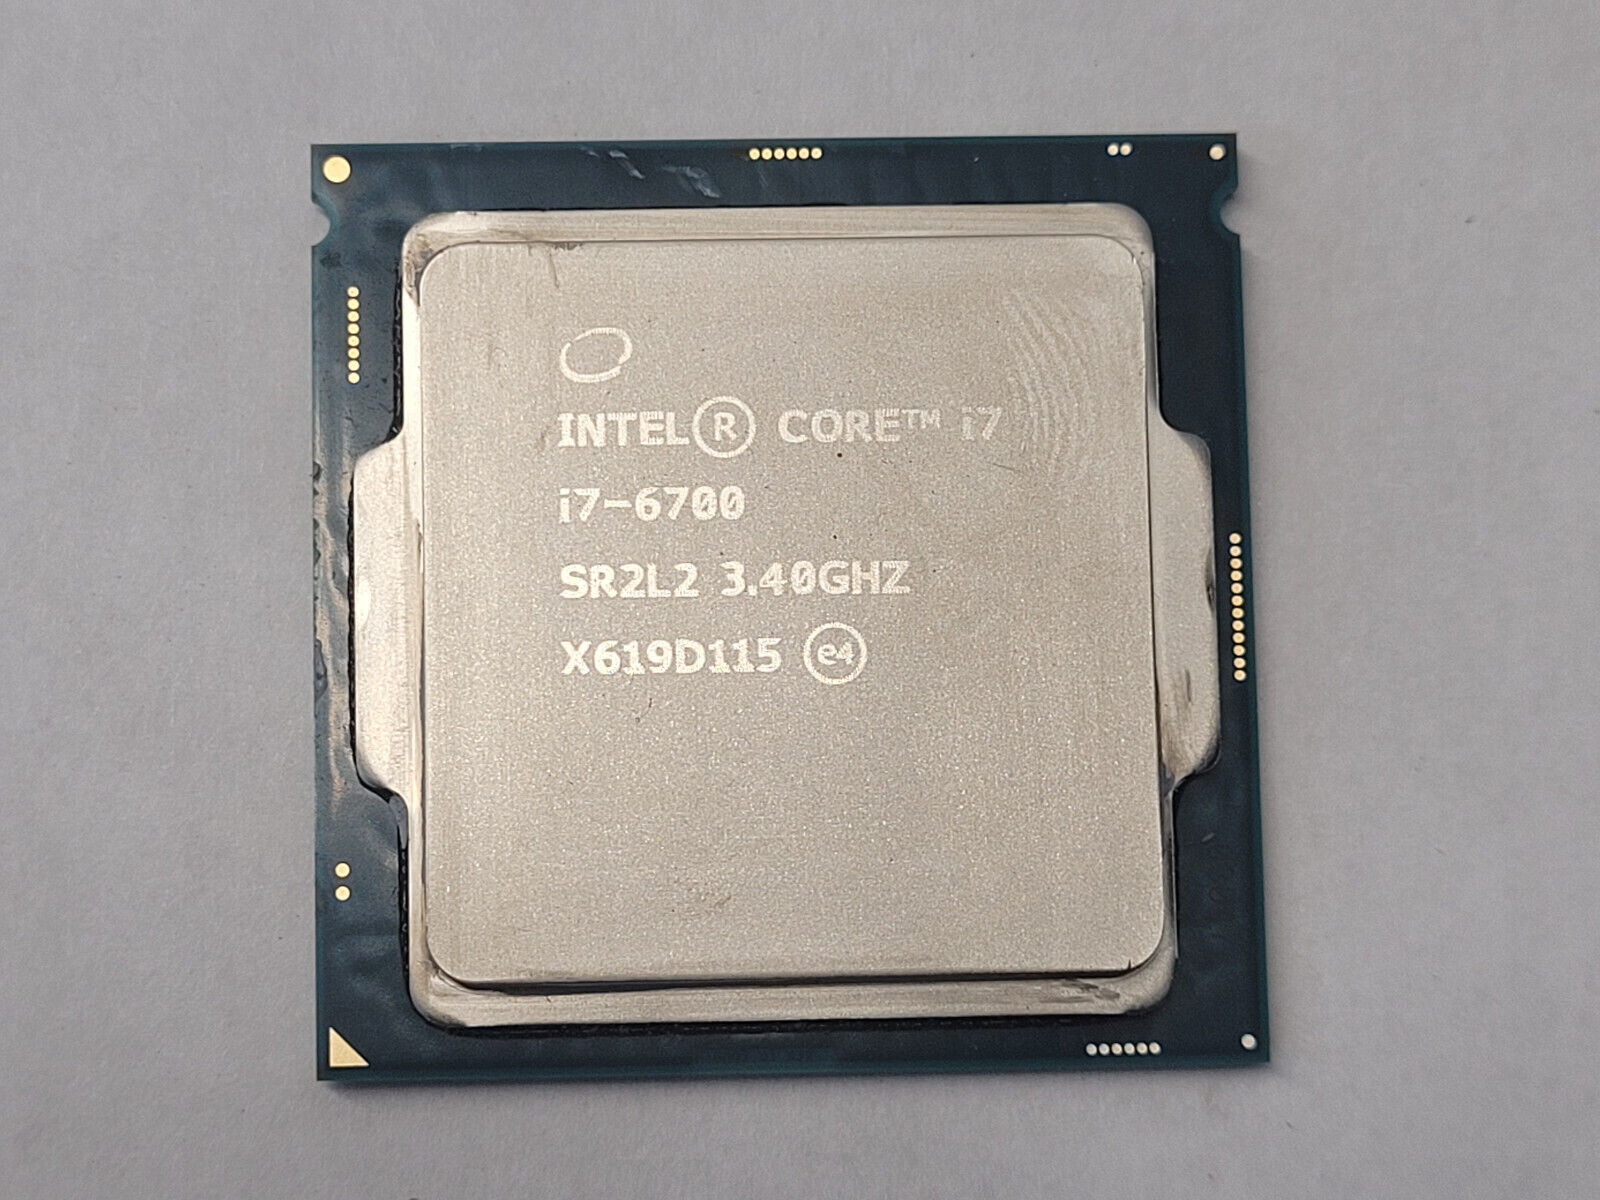 Intel Core i7-6700 SR2L2 3.40GHz  LGA 1151 CPU Processor